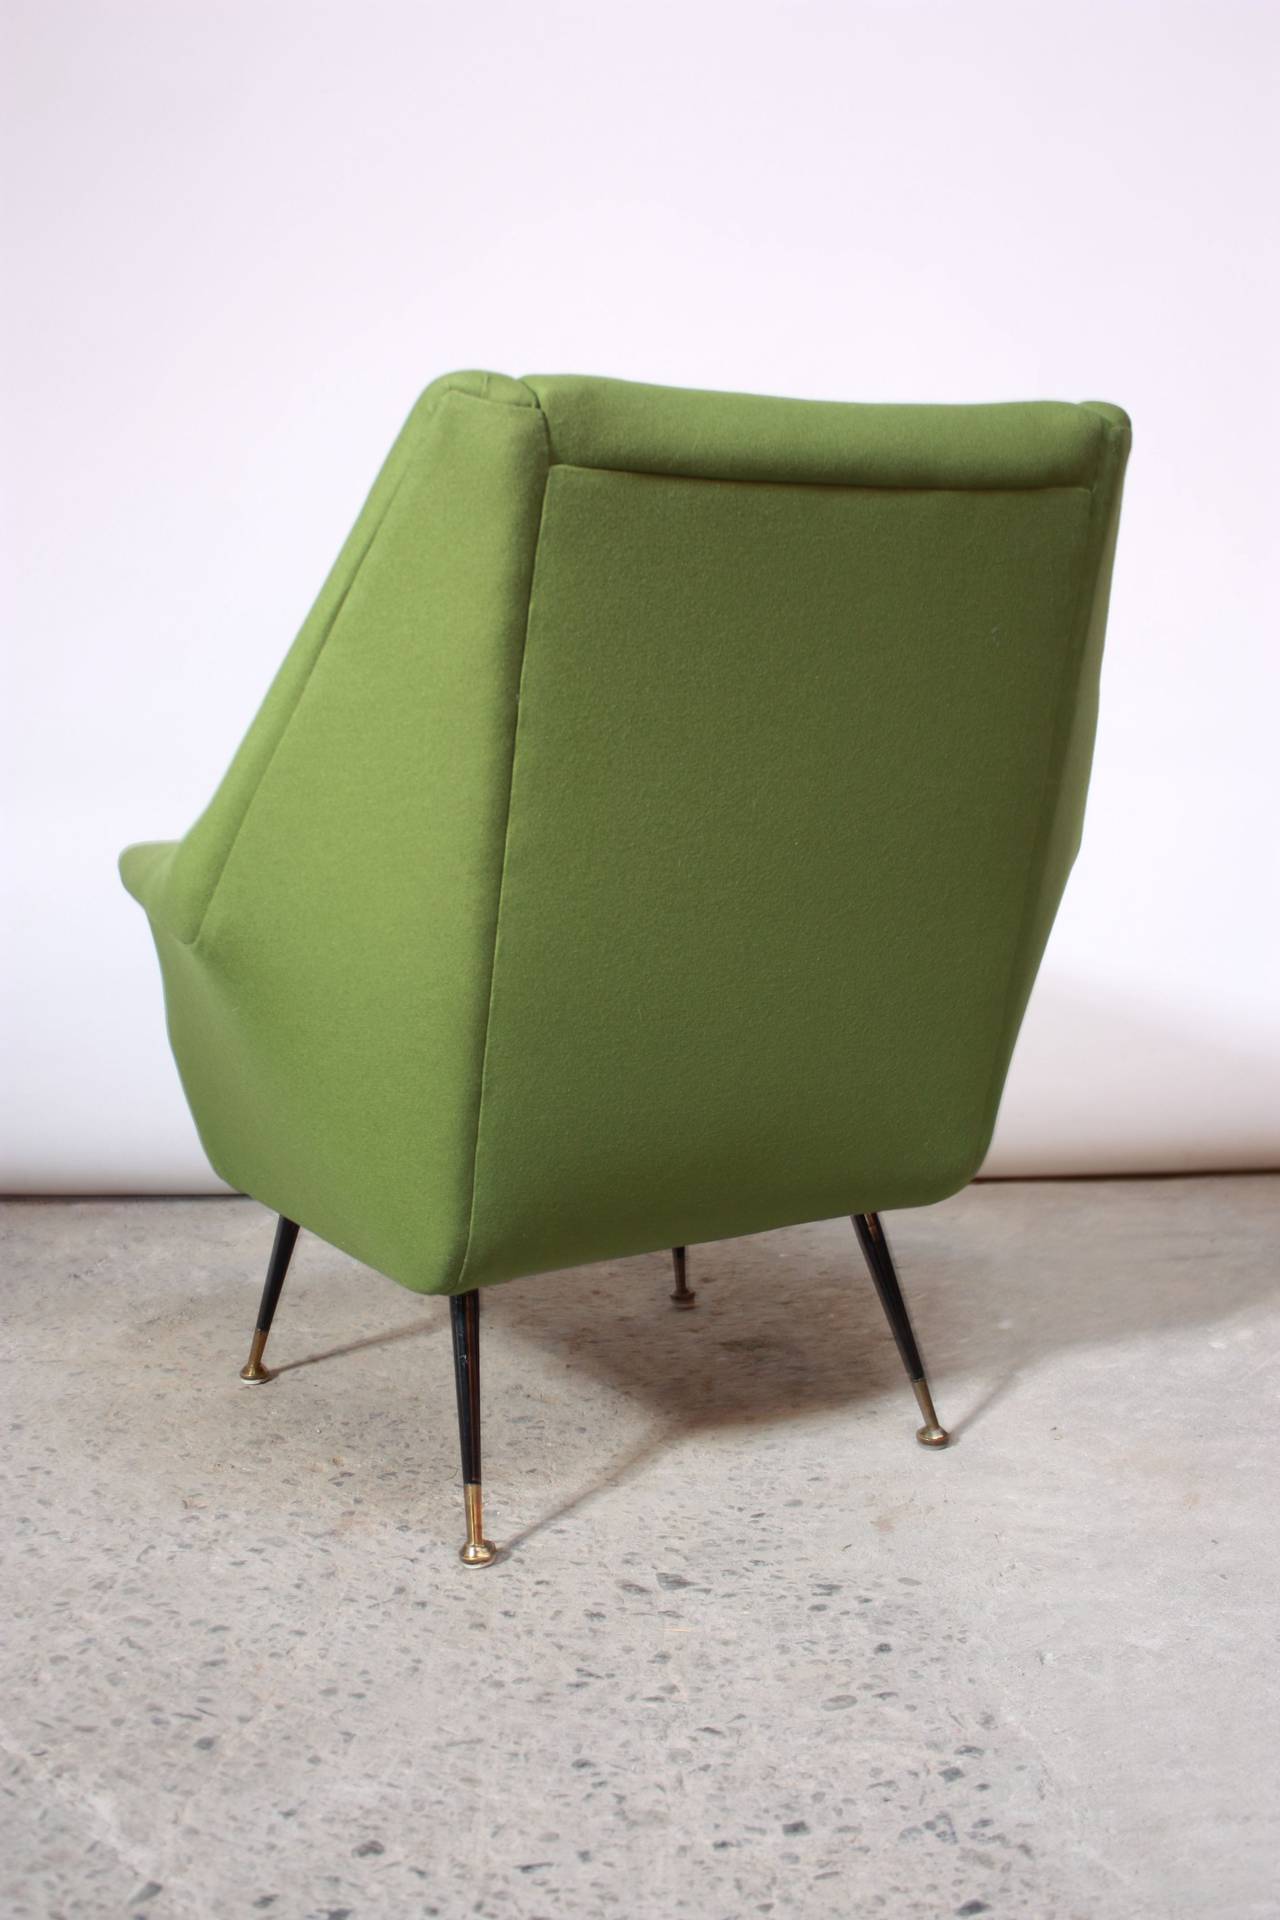 Mid-Century Modern 1950s Italian Lounge Chair Attributed to Gio Ponti